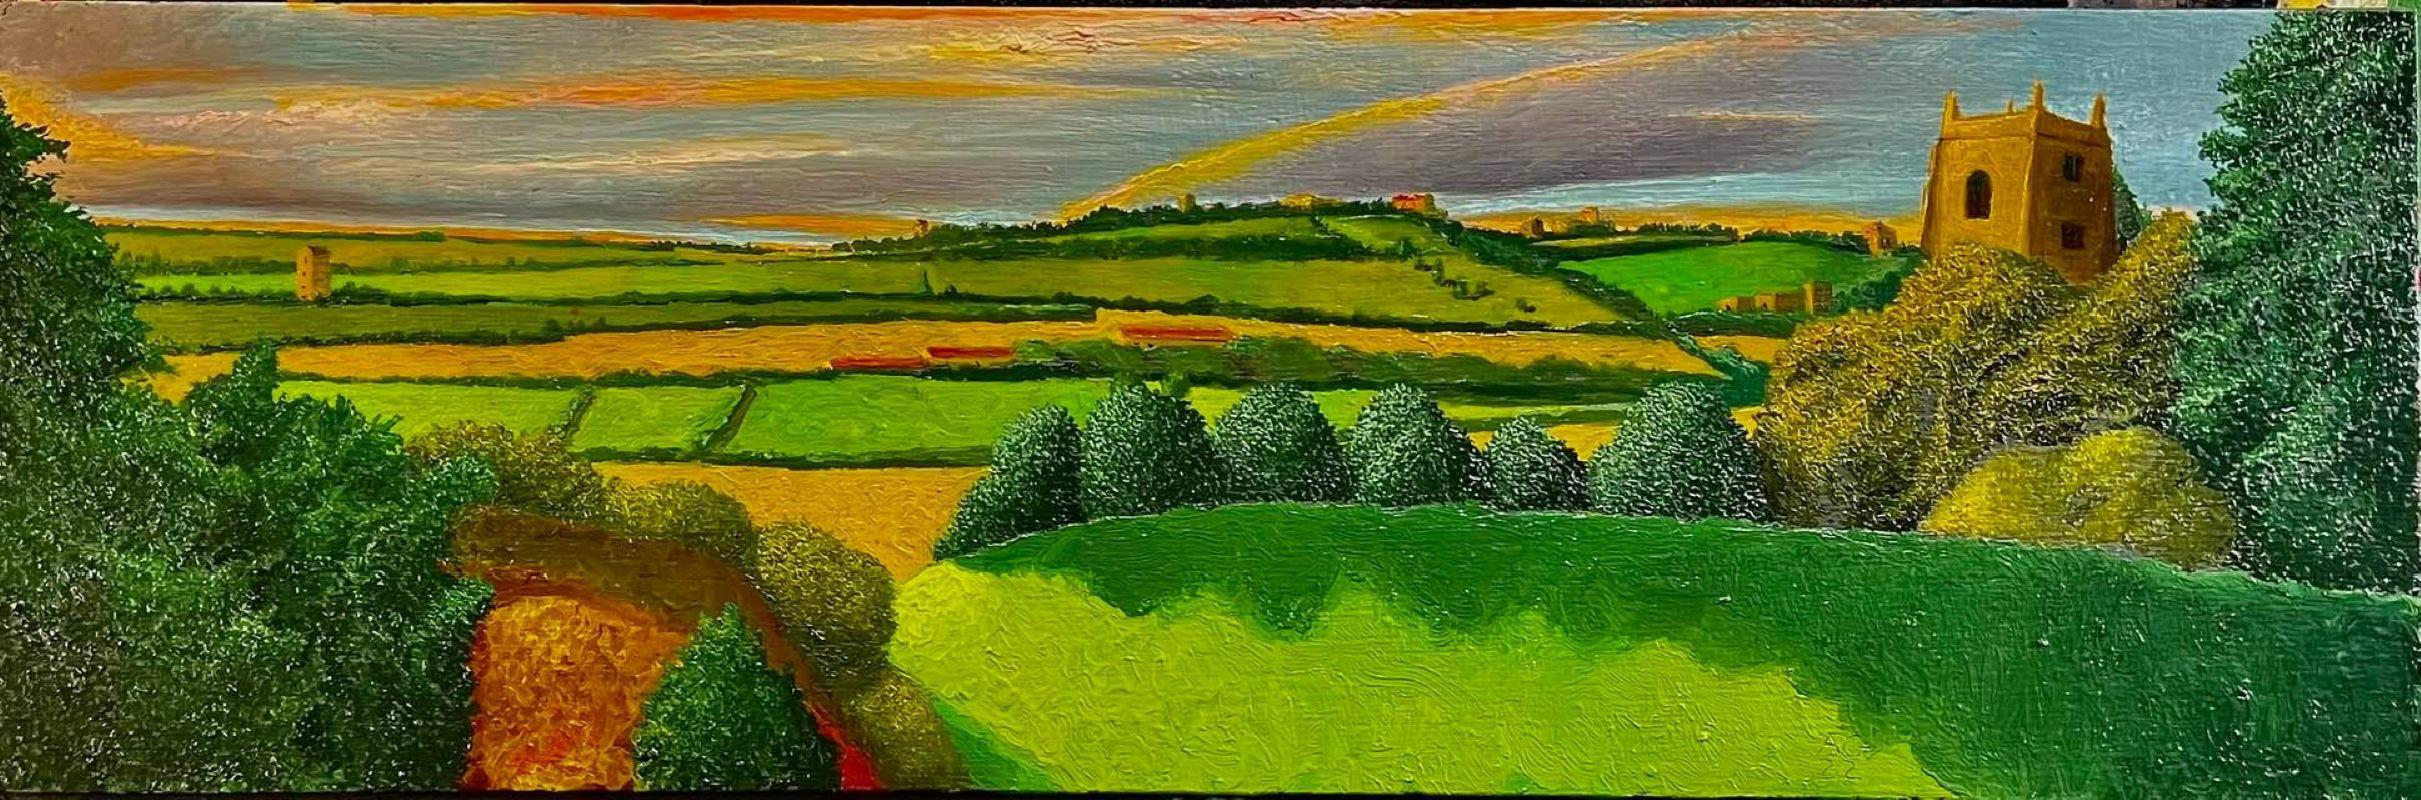 Alan Gerson Landscape Painting - Landscape with Tower